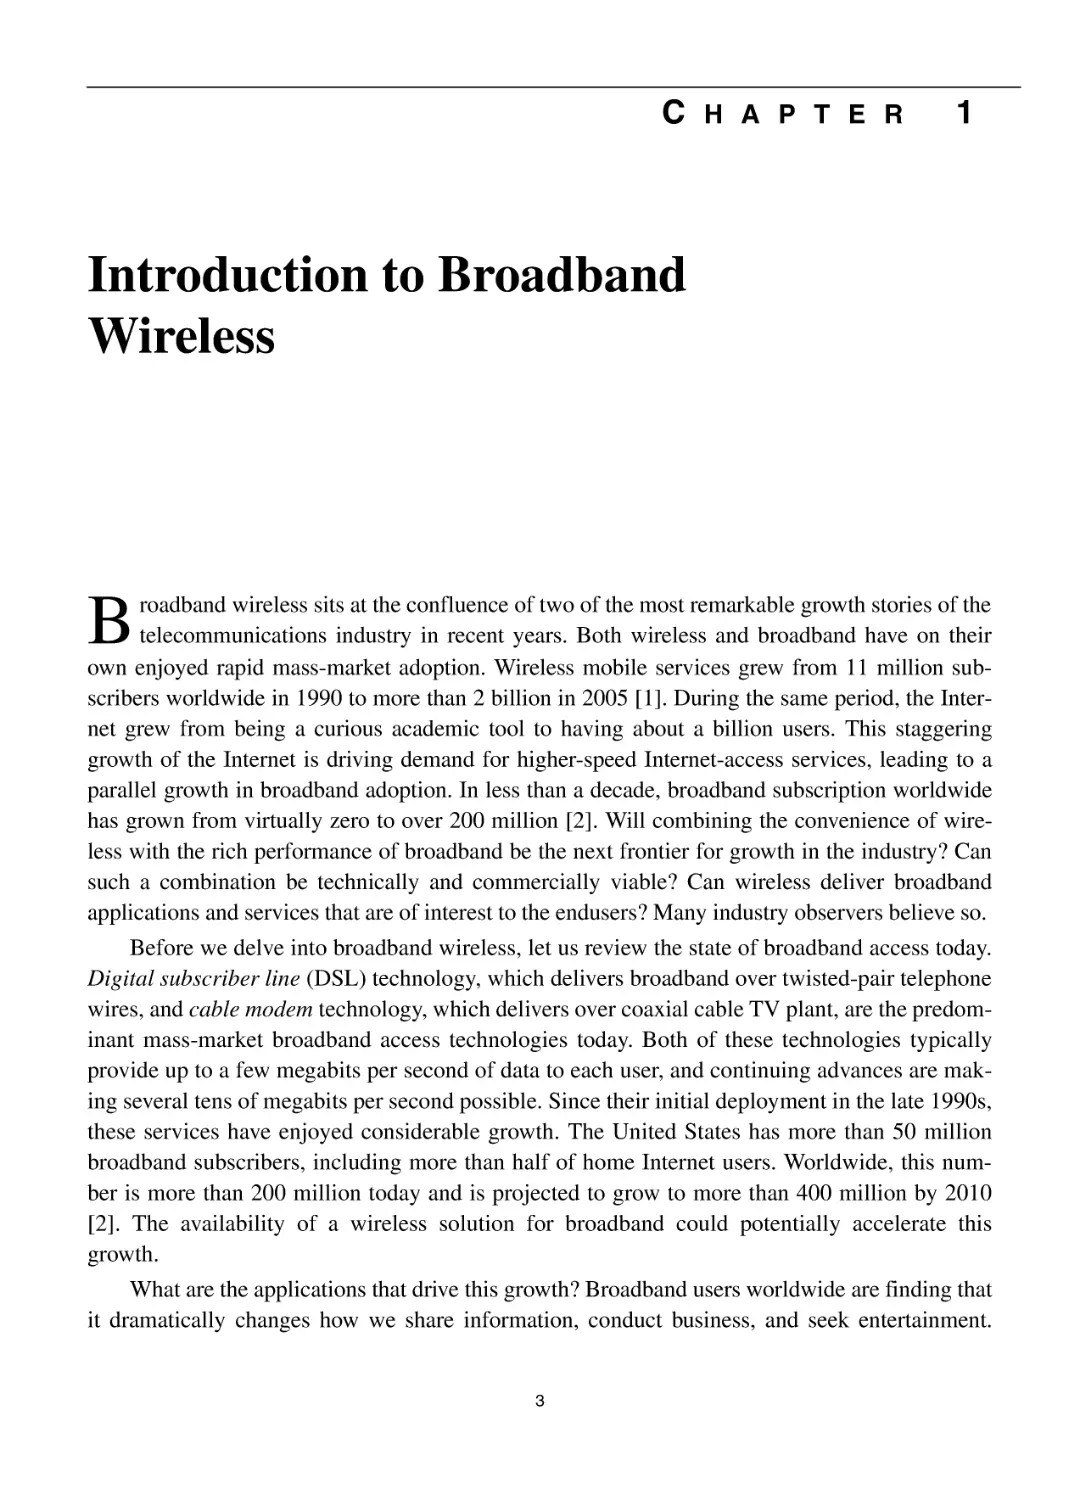 1 Introduction to Broadband Wireless